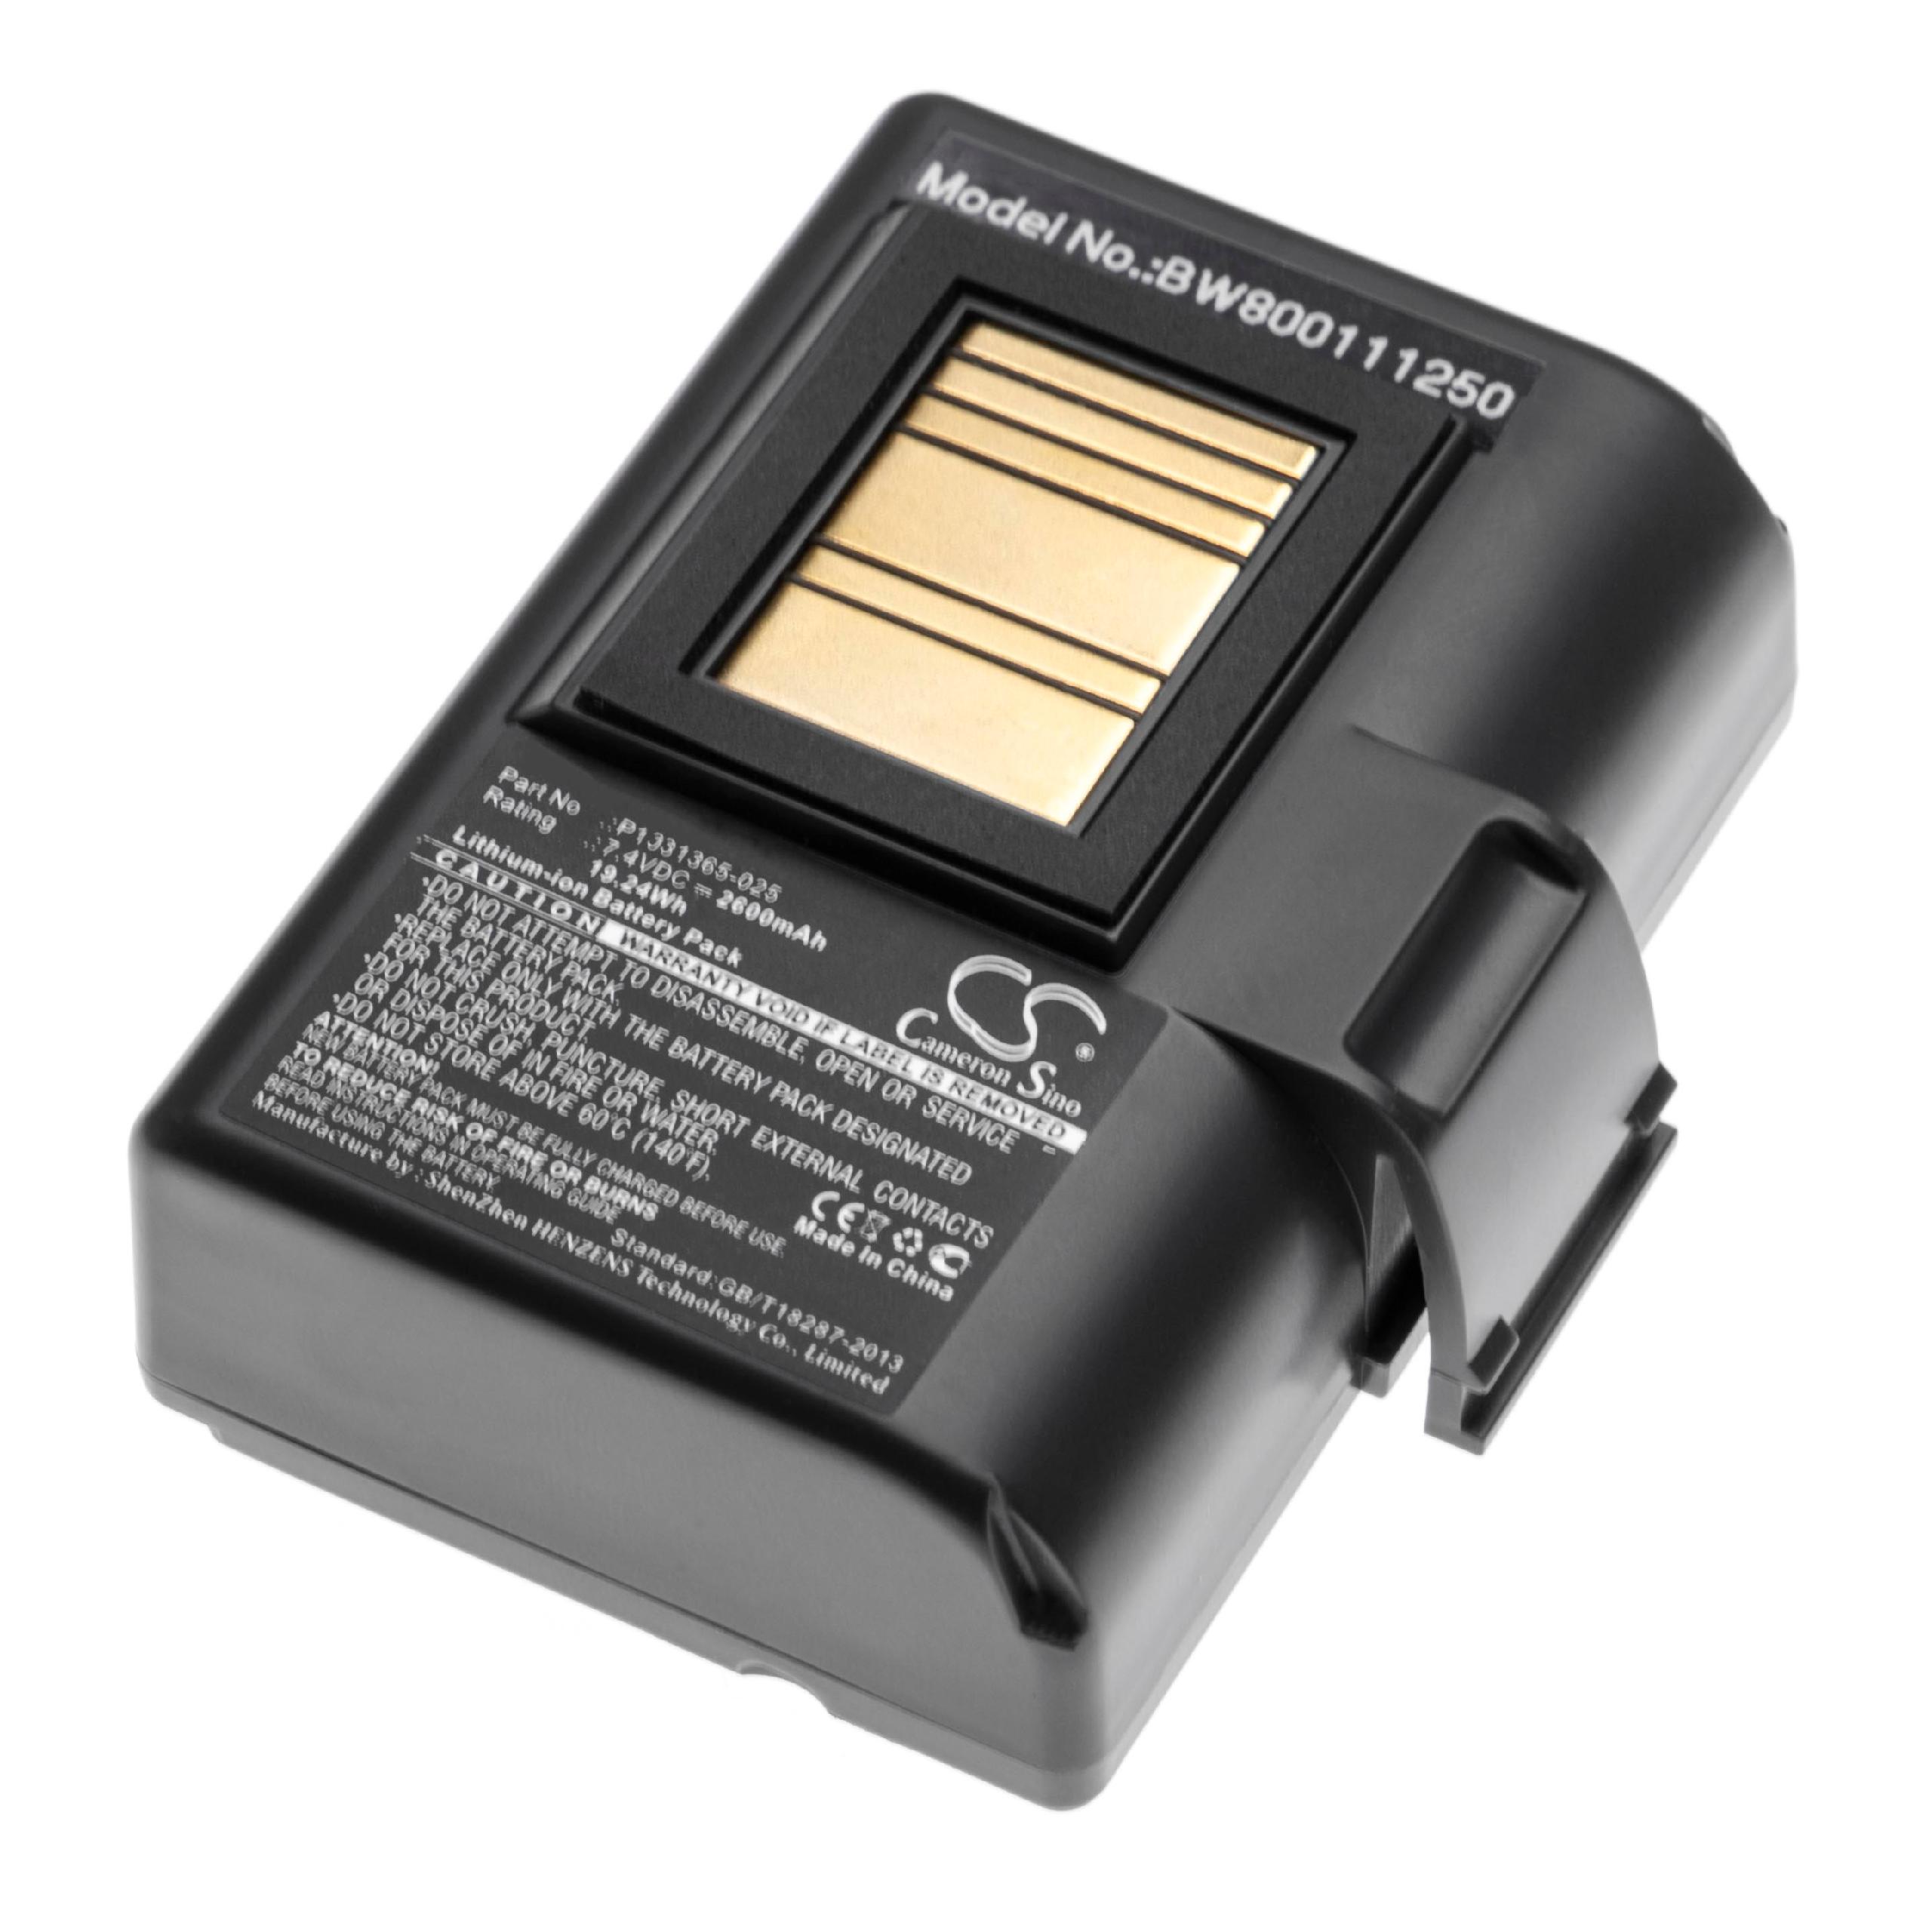 Printer Battery Replacement for Zebra AT16004, BTRY-MPP-34MA1-01, BTRY-MPP-34MAHC1-01 - 2600mAh 7.4V Li-Ion